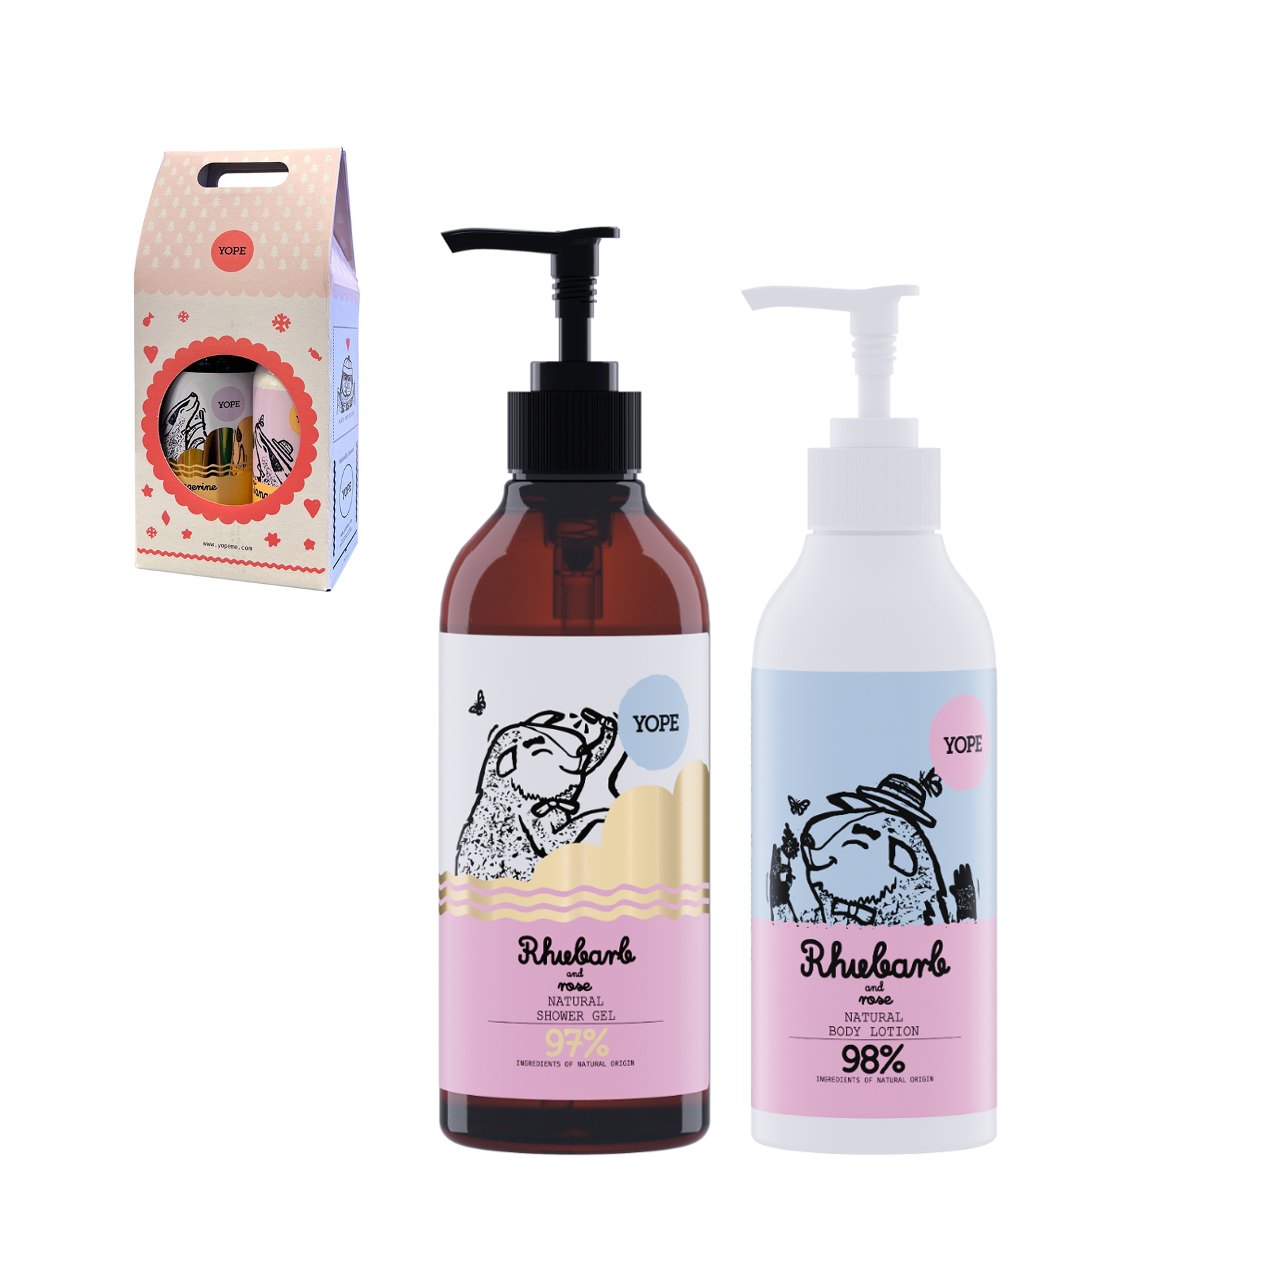 大黃和玫瑰沐浴露配手部和身體乳液孖裝套裝禮盒/ Rhubarb and Rose Shower gel and Body & Hand Lotion Duo Gift Set